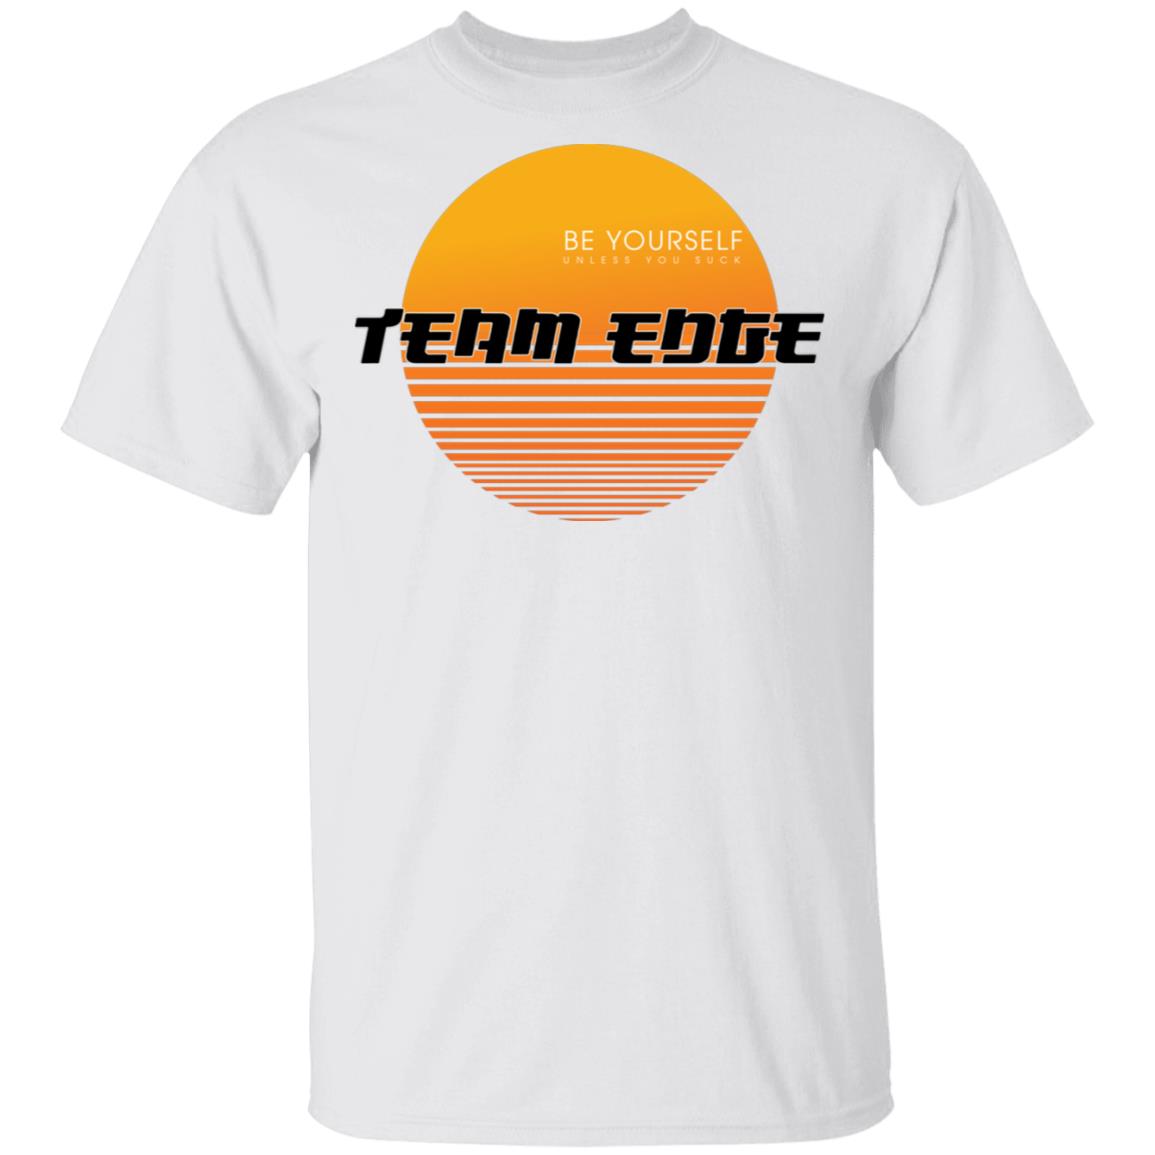 Team Edge Merch Bobby Tee
#TeamEdge #TeamEdgeMerch #BobbyTee #Merchandise #Clothing #Fashion #Apparel #US #USA #OnlineShopping #YouTube #Entertainment

tipatee.com/product/team-e…